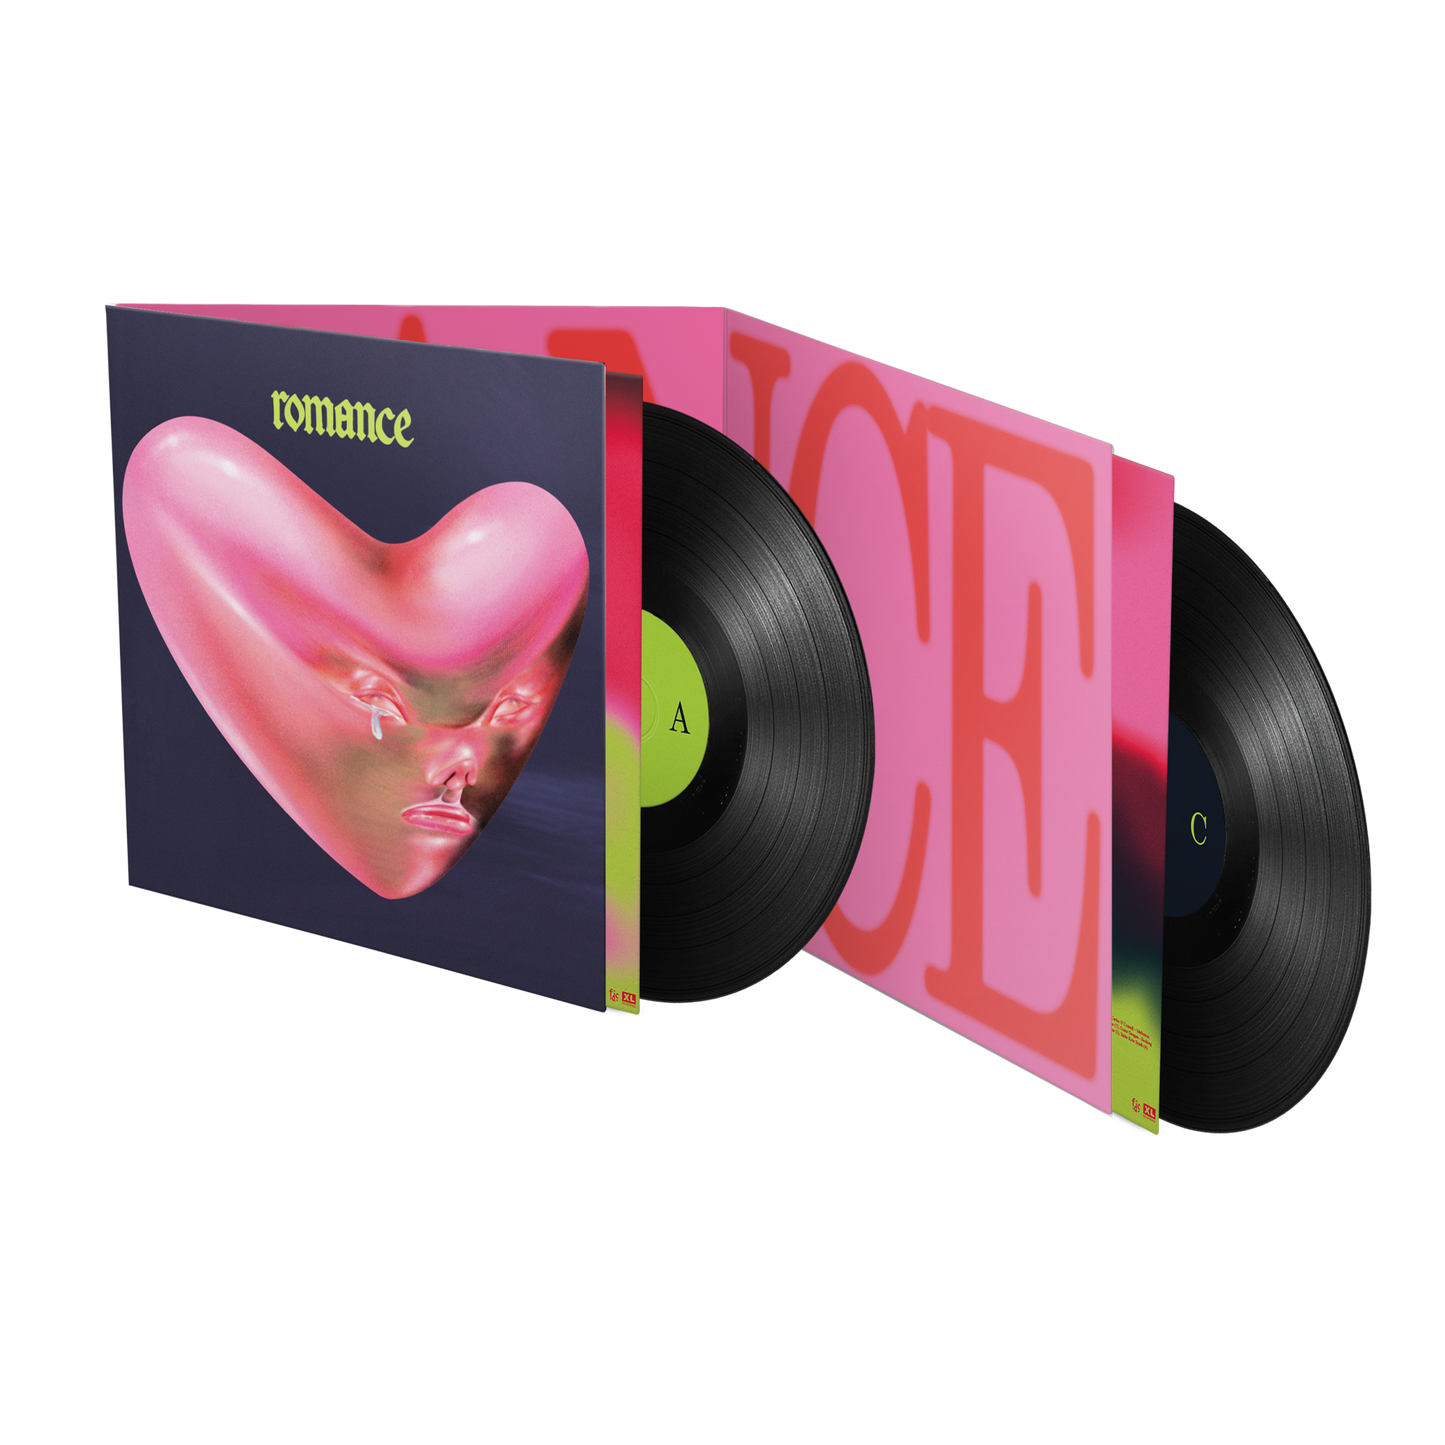 Romance (Deluxe Triple Gatefold) Vinyl 2xLP [PREORDER]